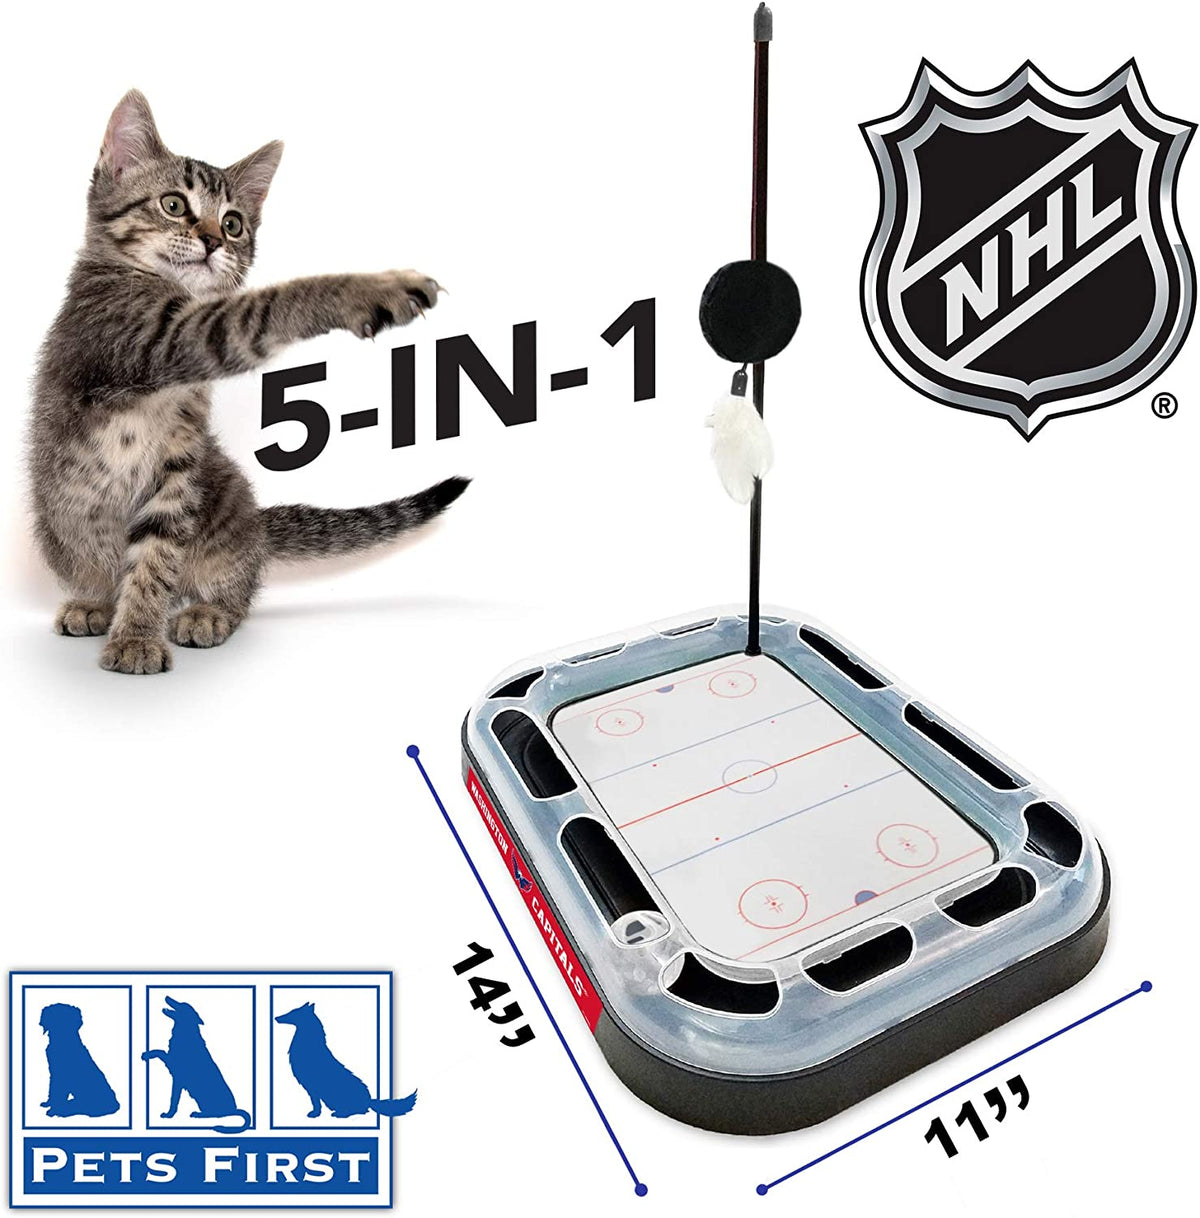 Washington Capitals Hockey Rink Cat Scratcher Toy